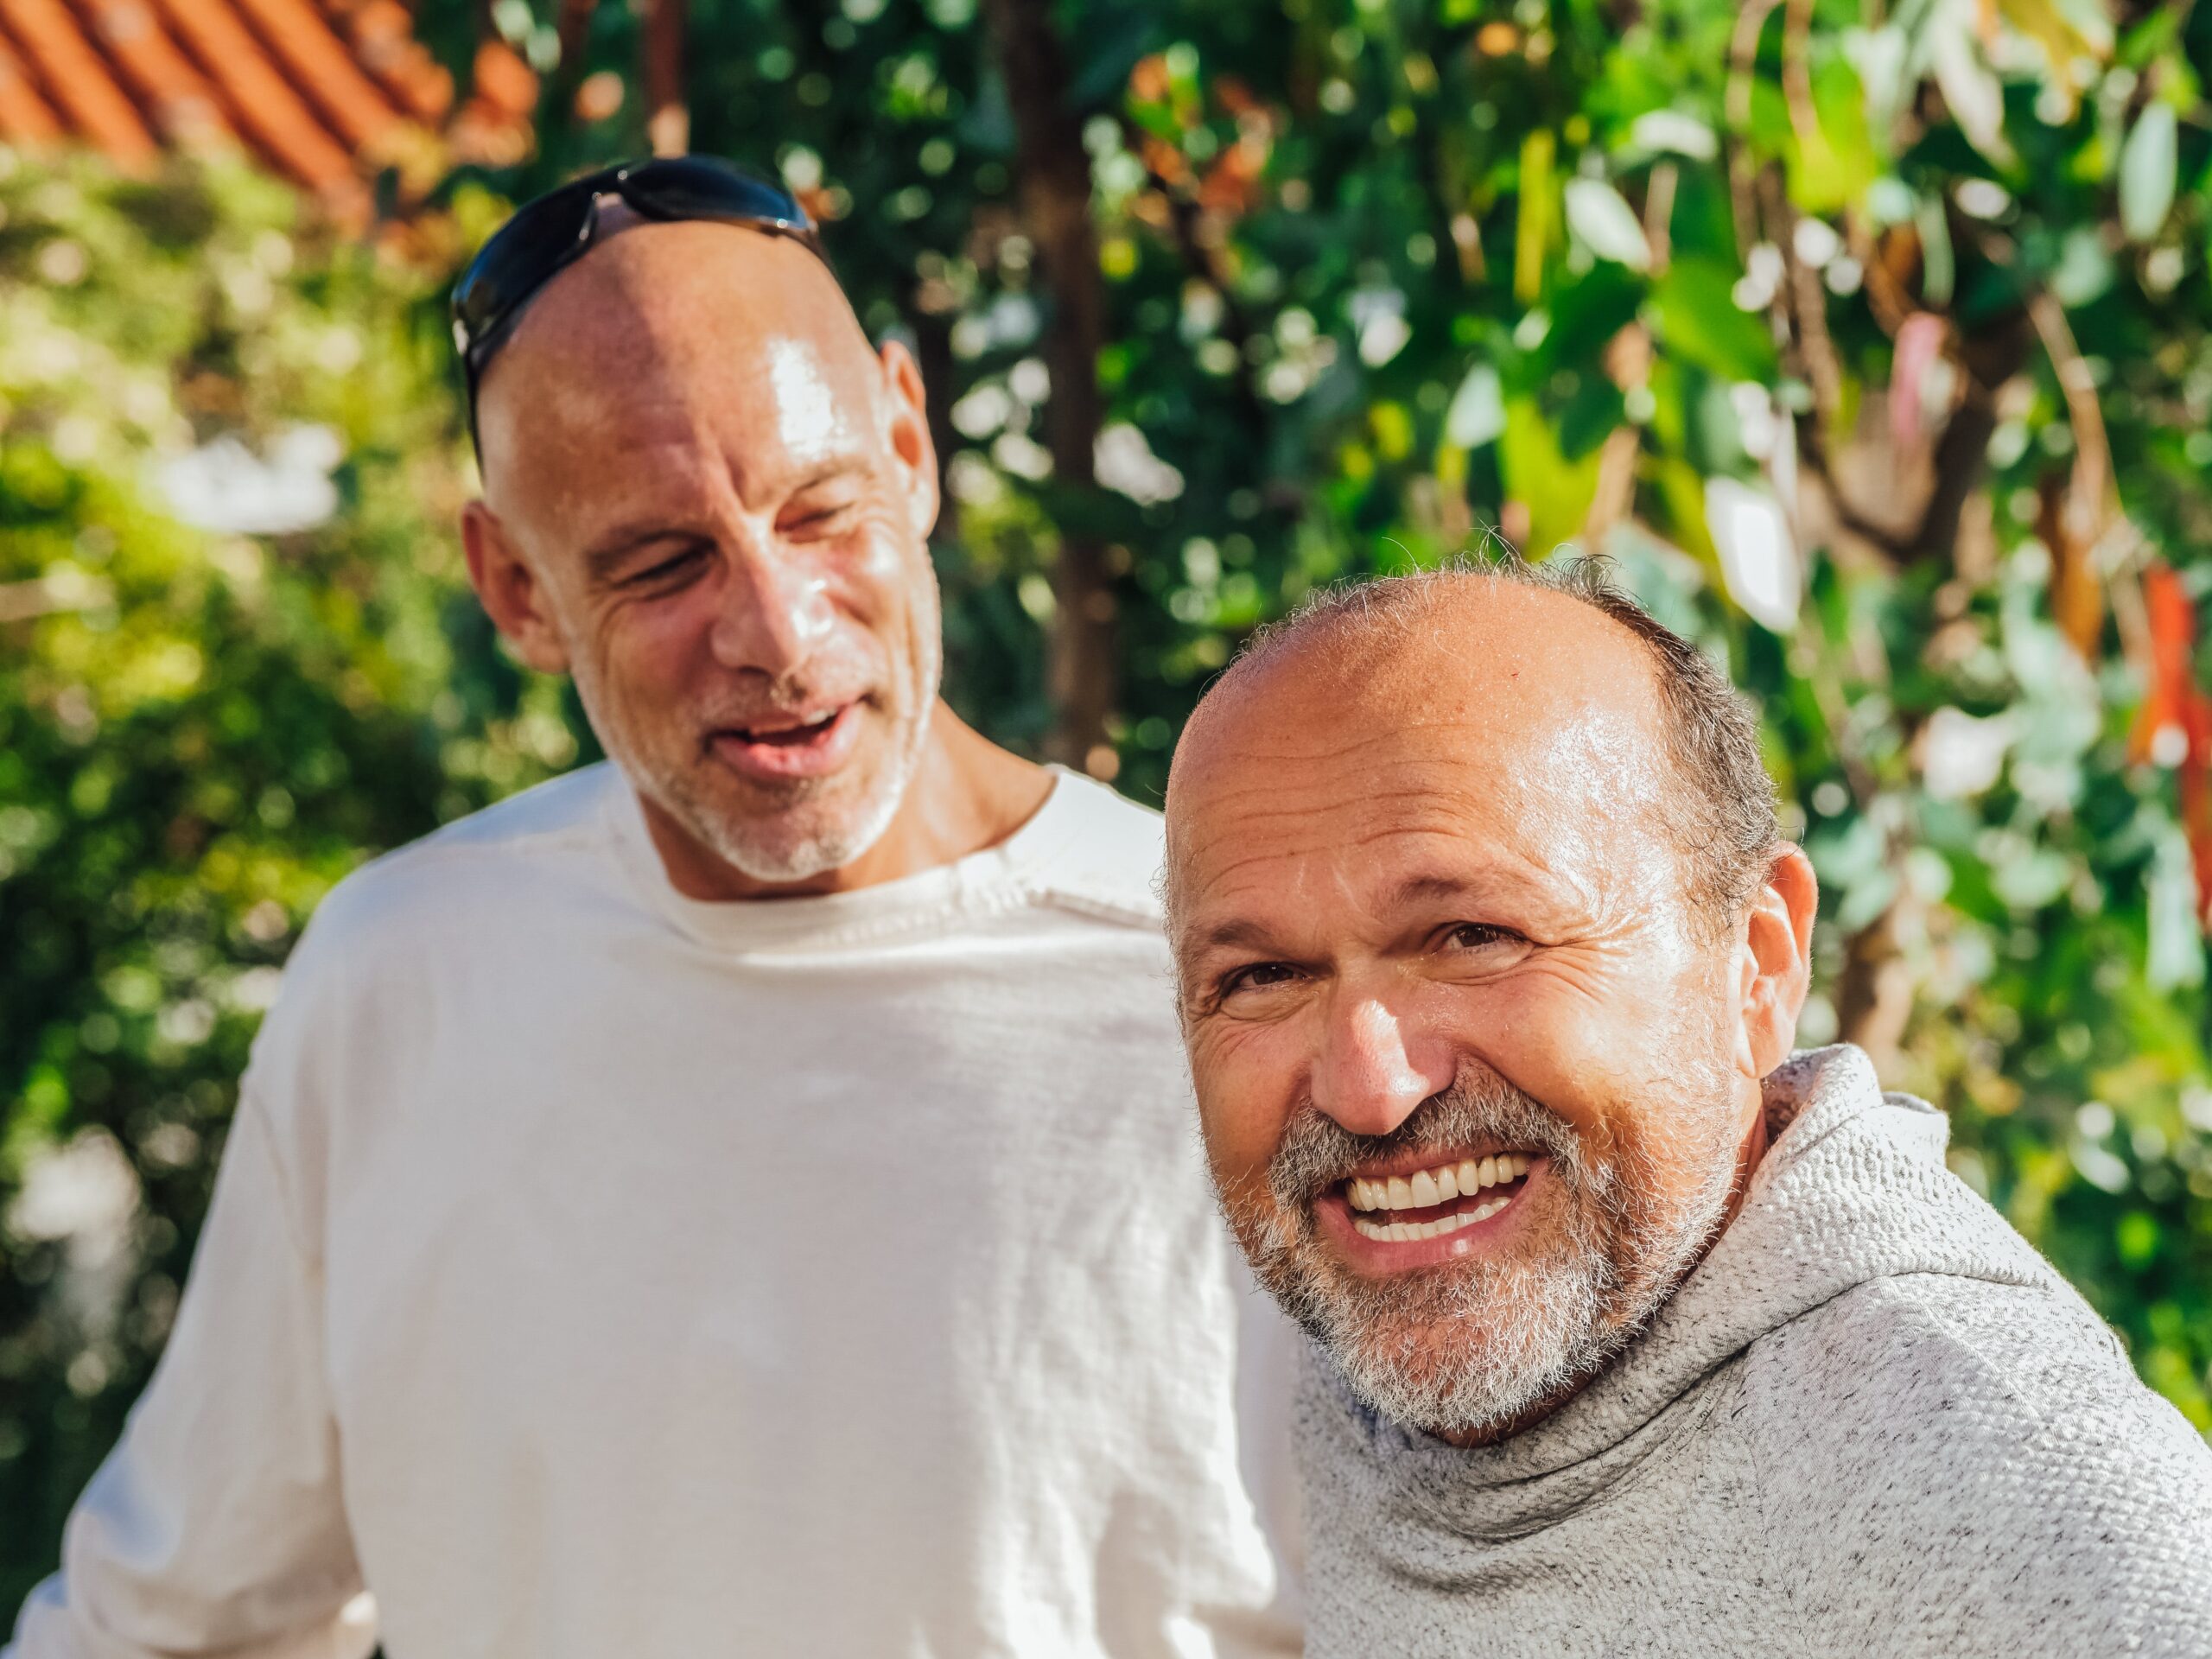 Two older men laughing together